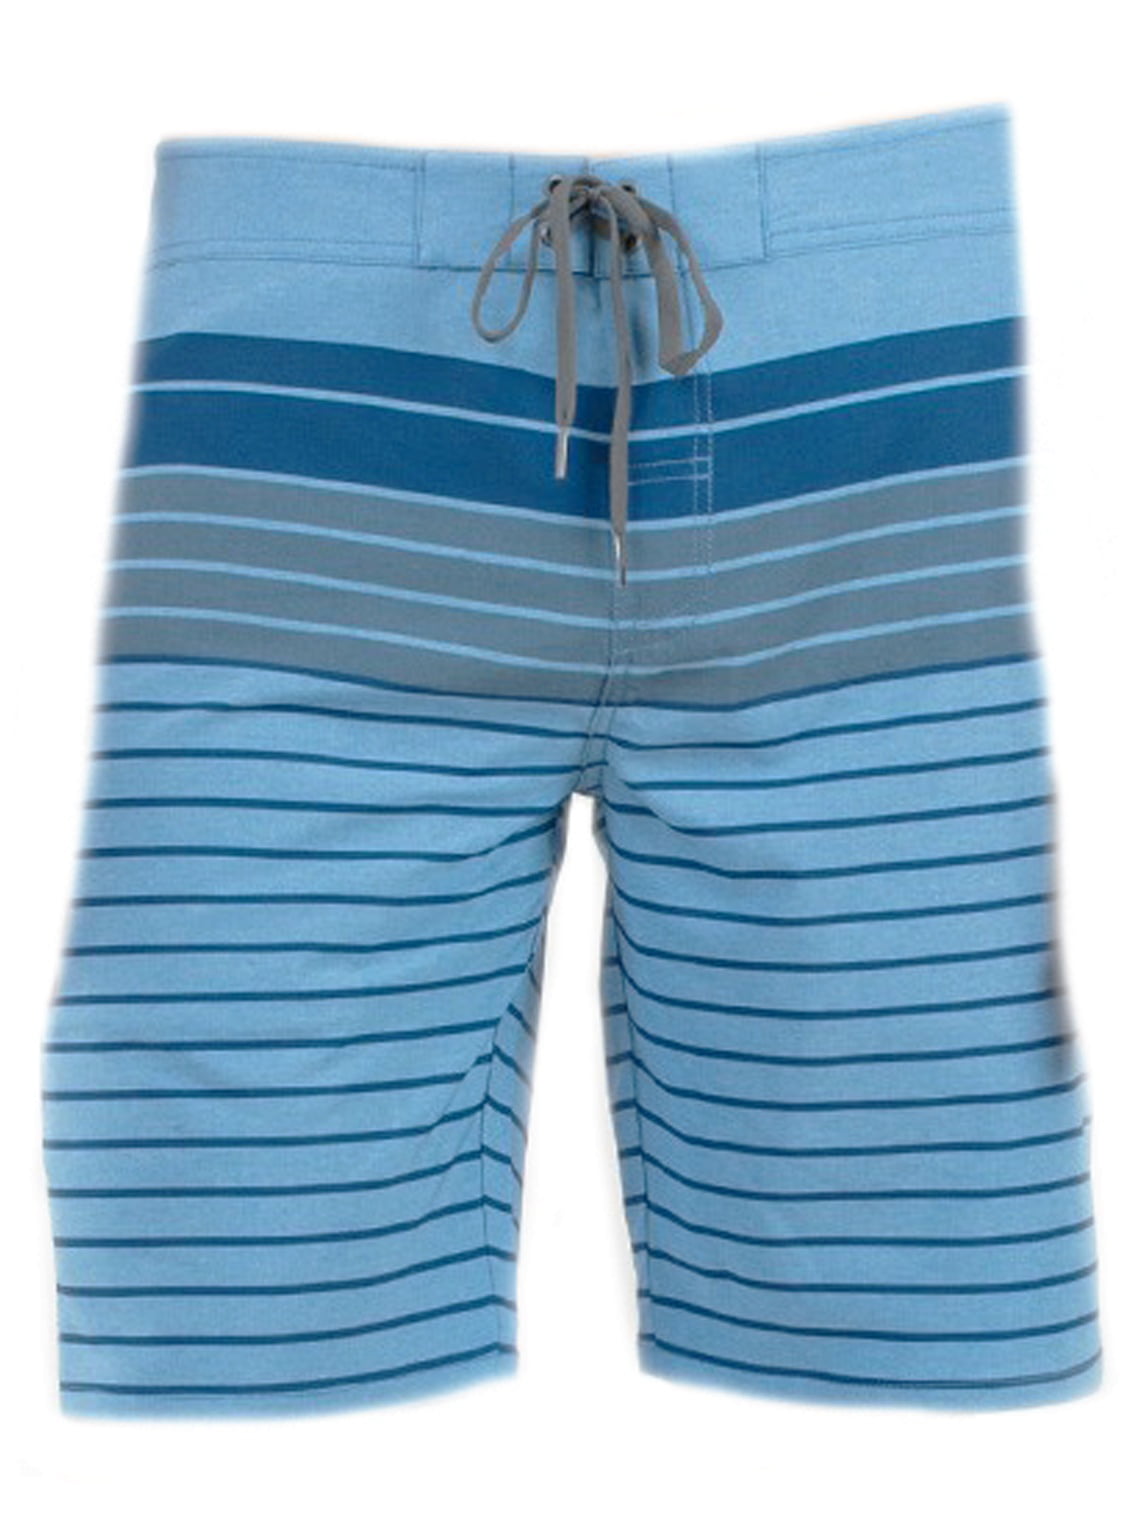 NEW Travis Mathew Golf Vest Blue Trunks/Board Shorts Mens Size 32 ...